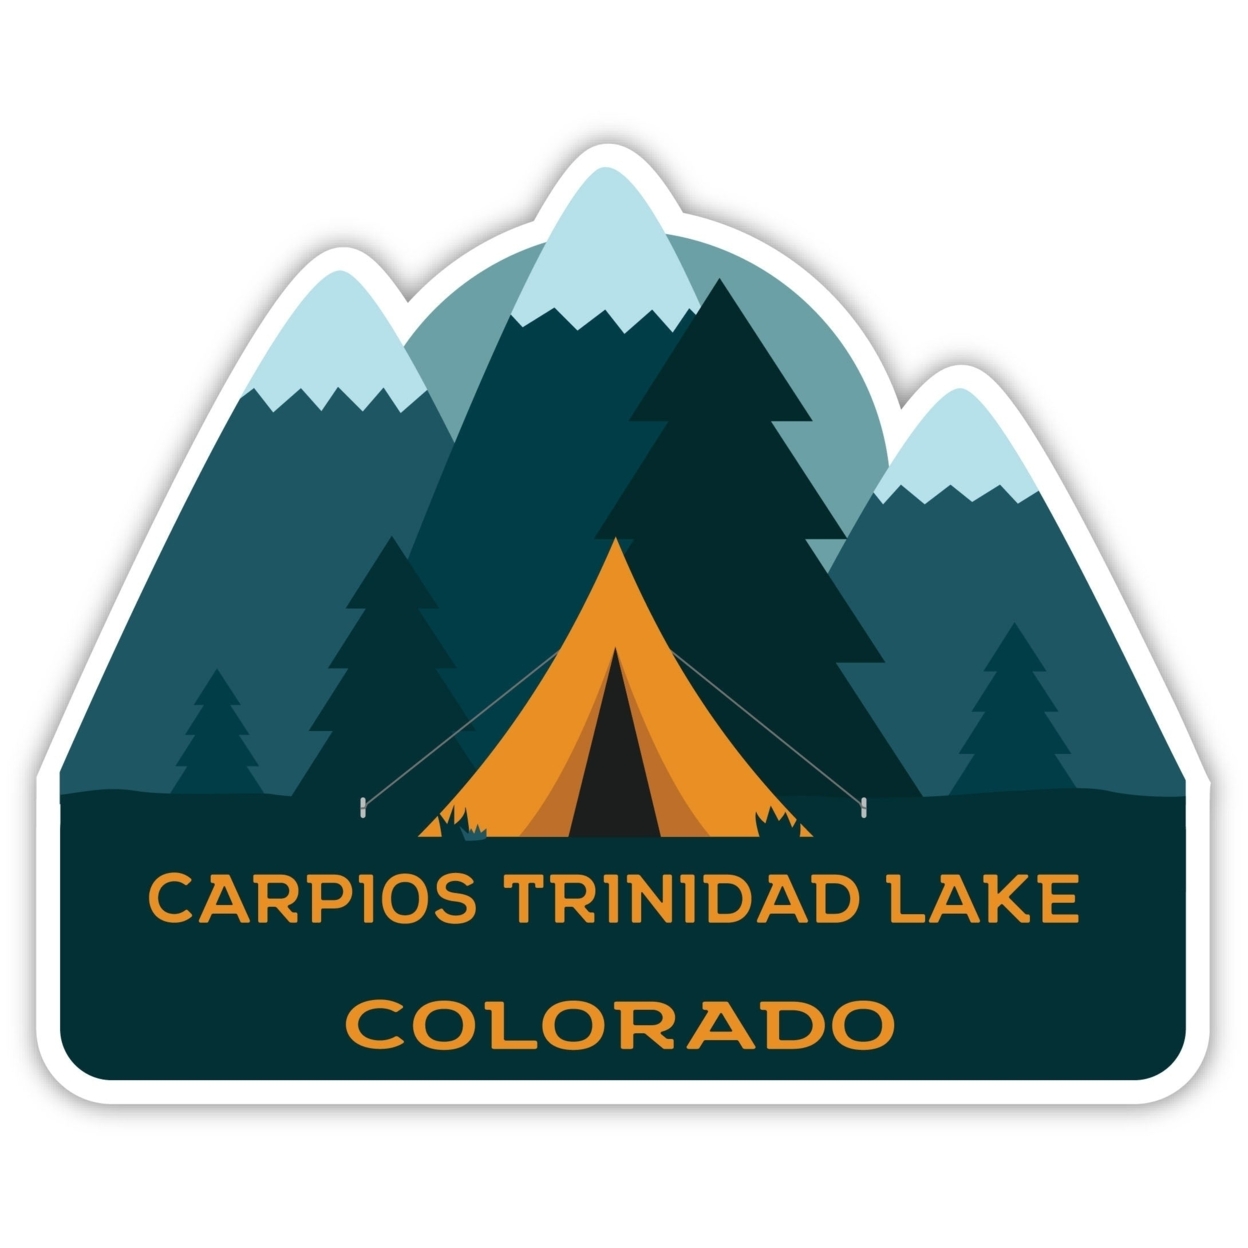 Carpios Trinidad Lake Colorado Souvenir Decorative Stickers (Choose Theme And Size) - 4-Pack, 8-Inch, Bear